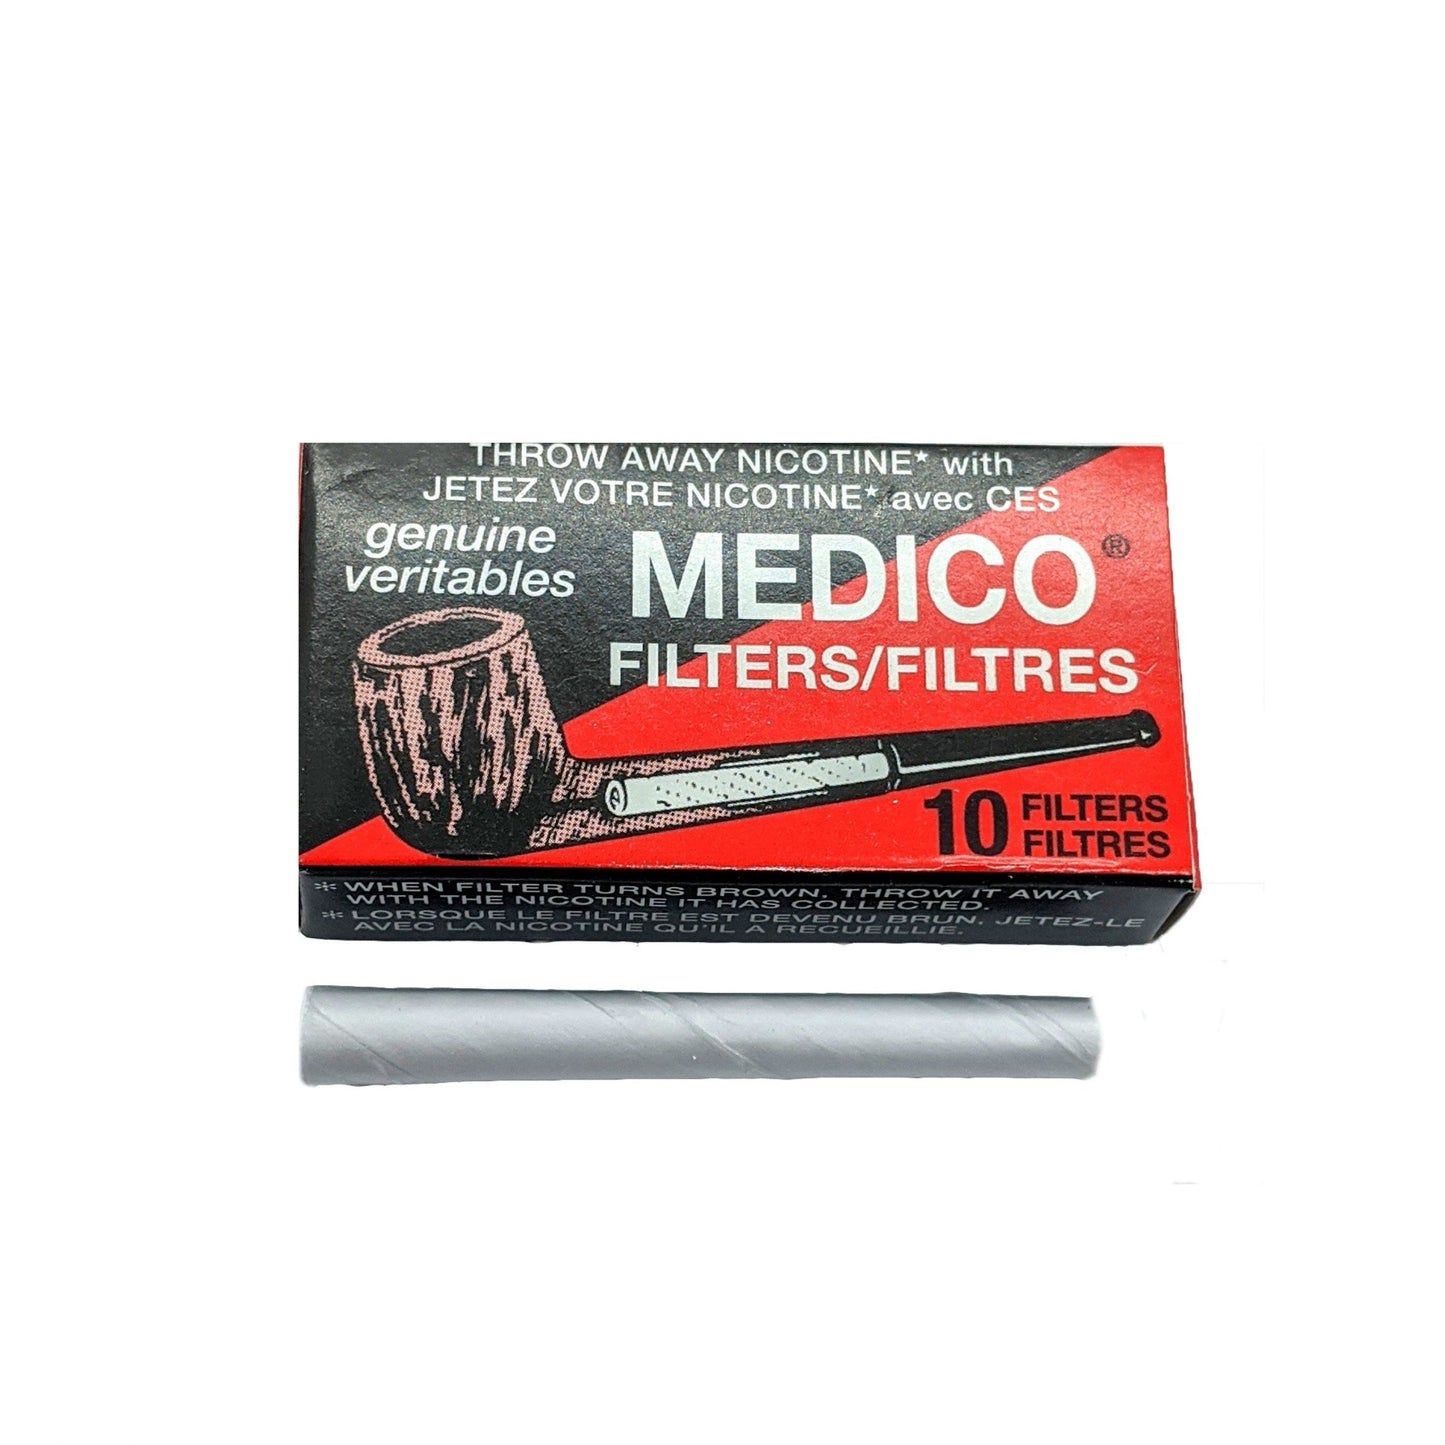 Medico Pipe Filters